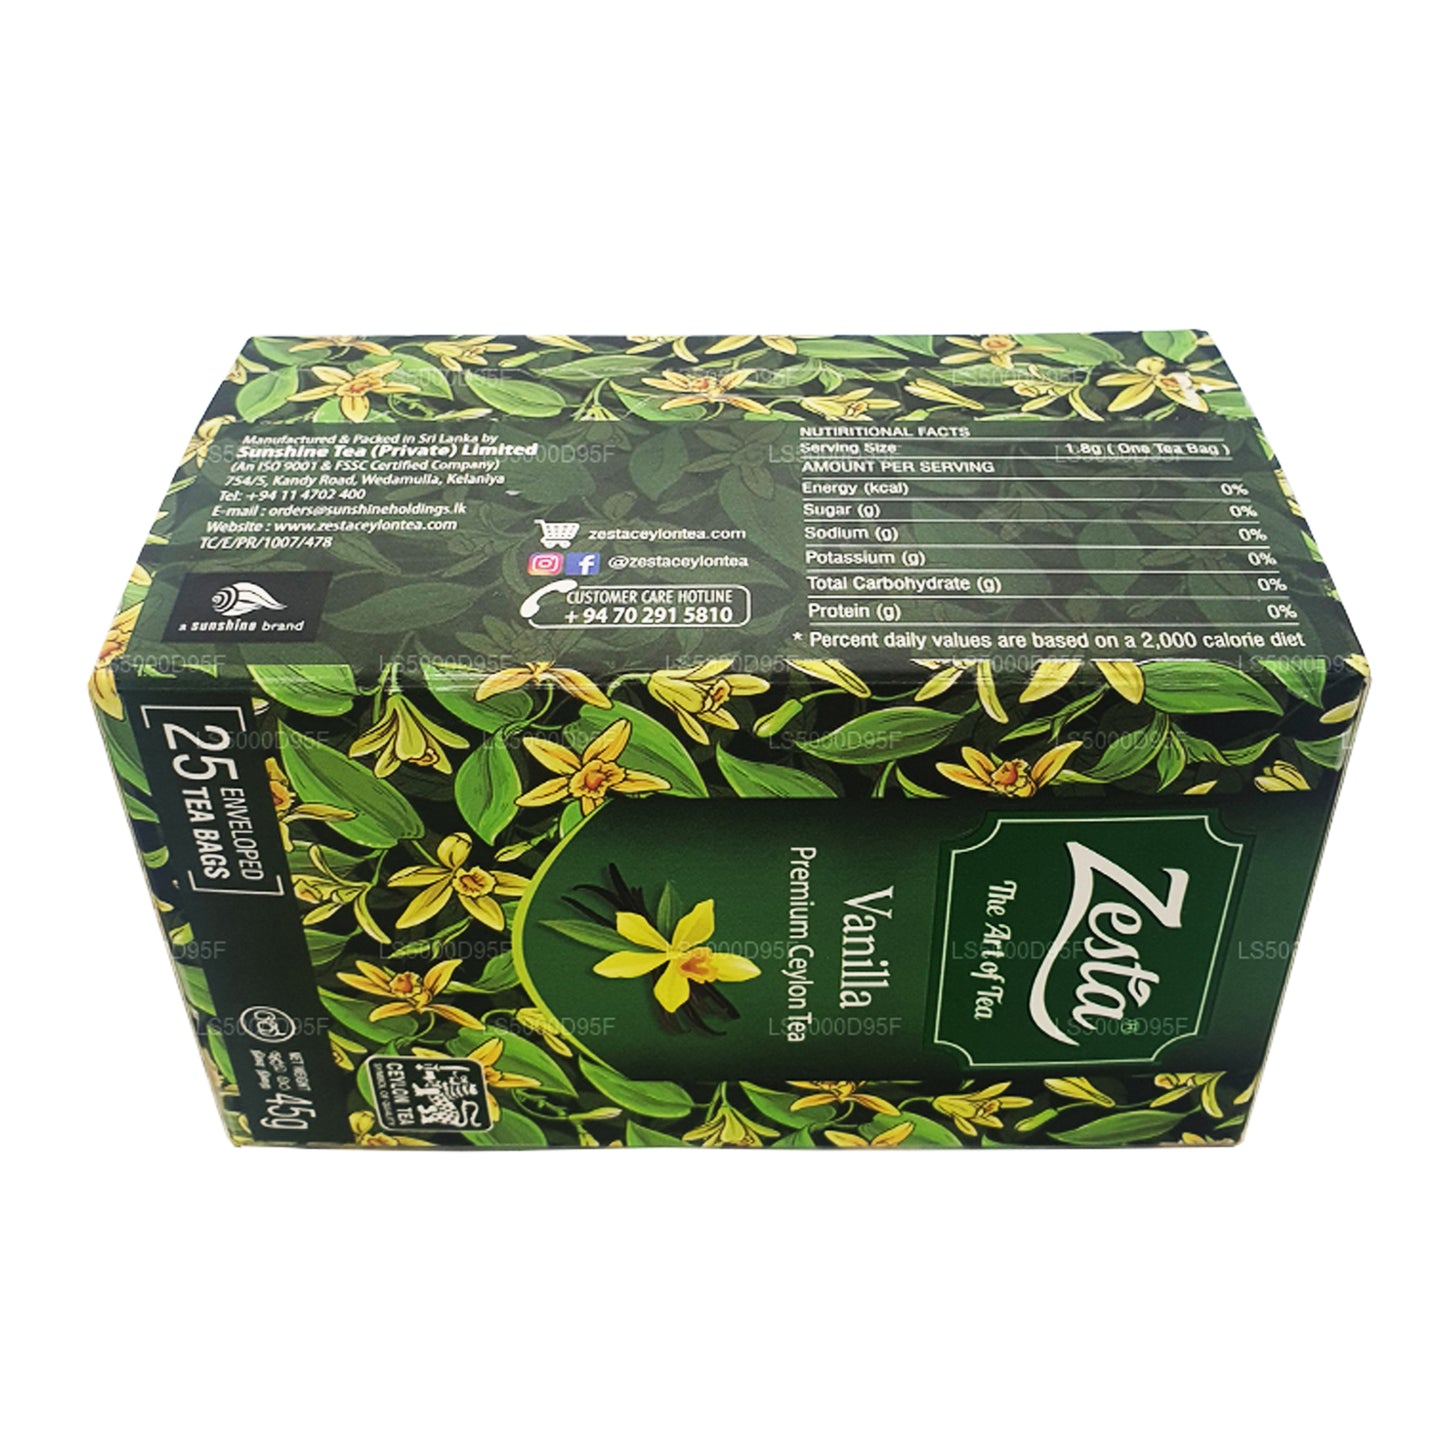 Té negro Zesta Vanilla (45 g) 25 bolsitas de té